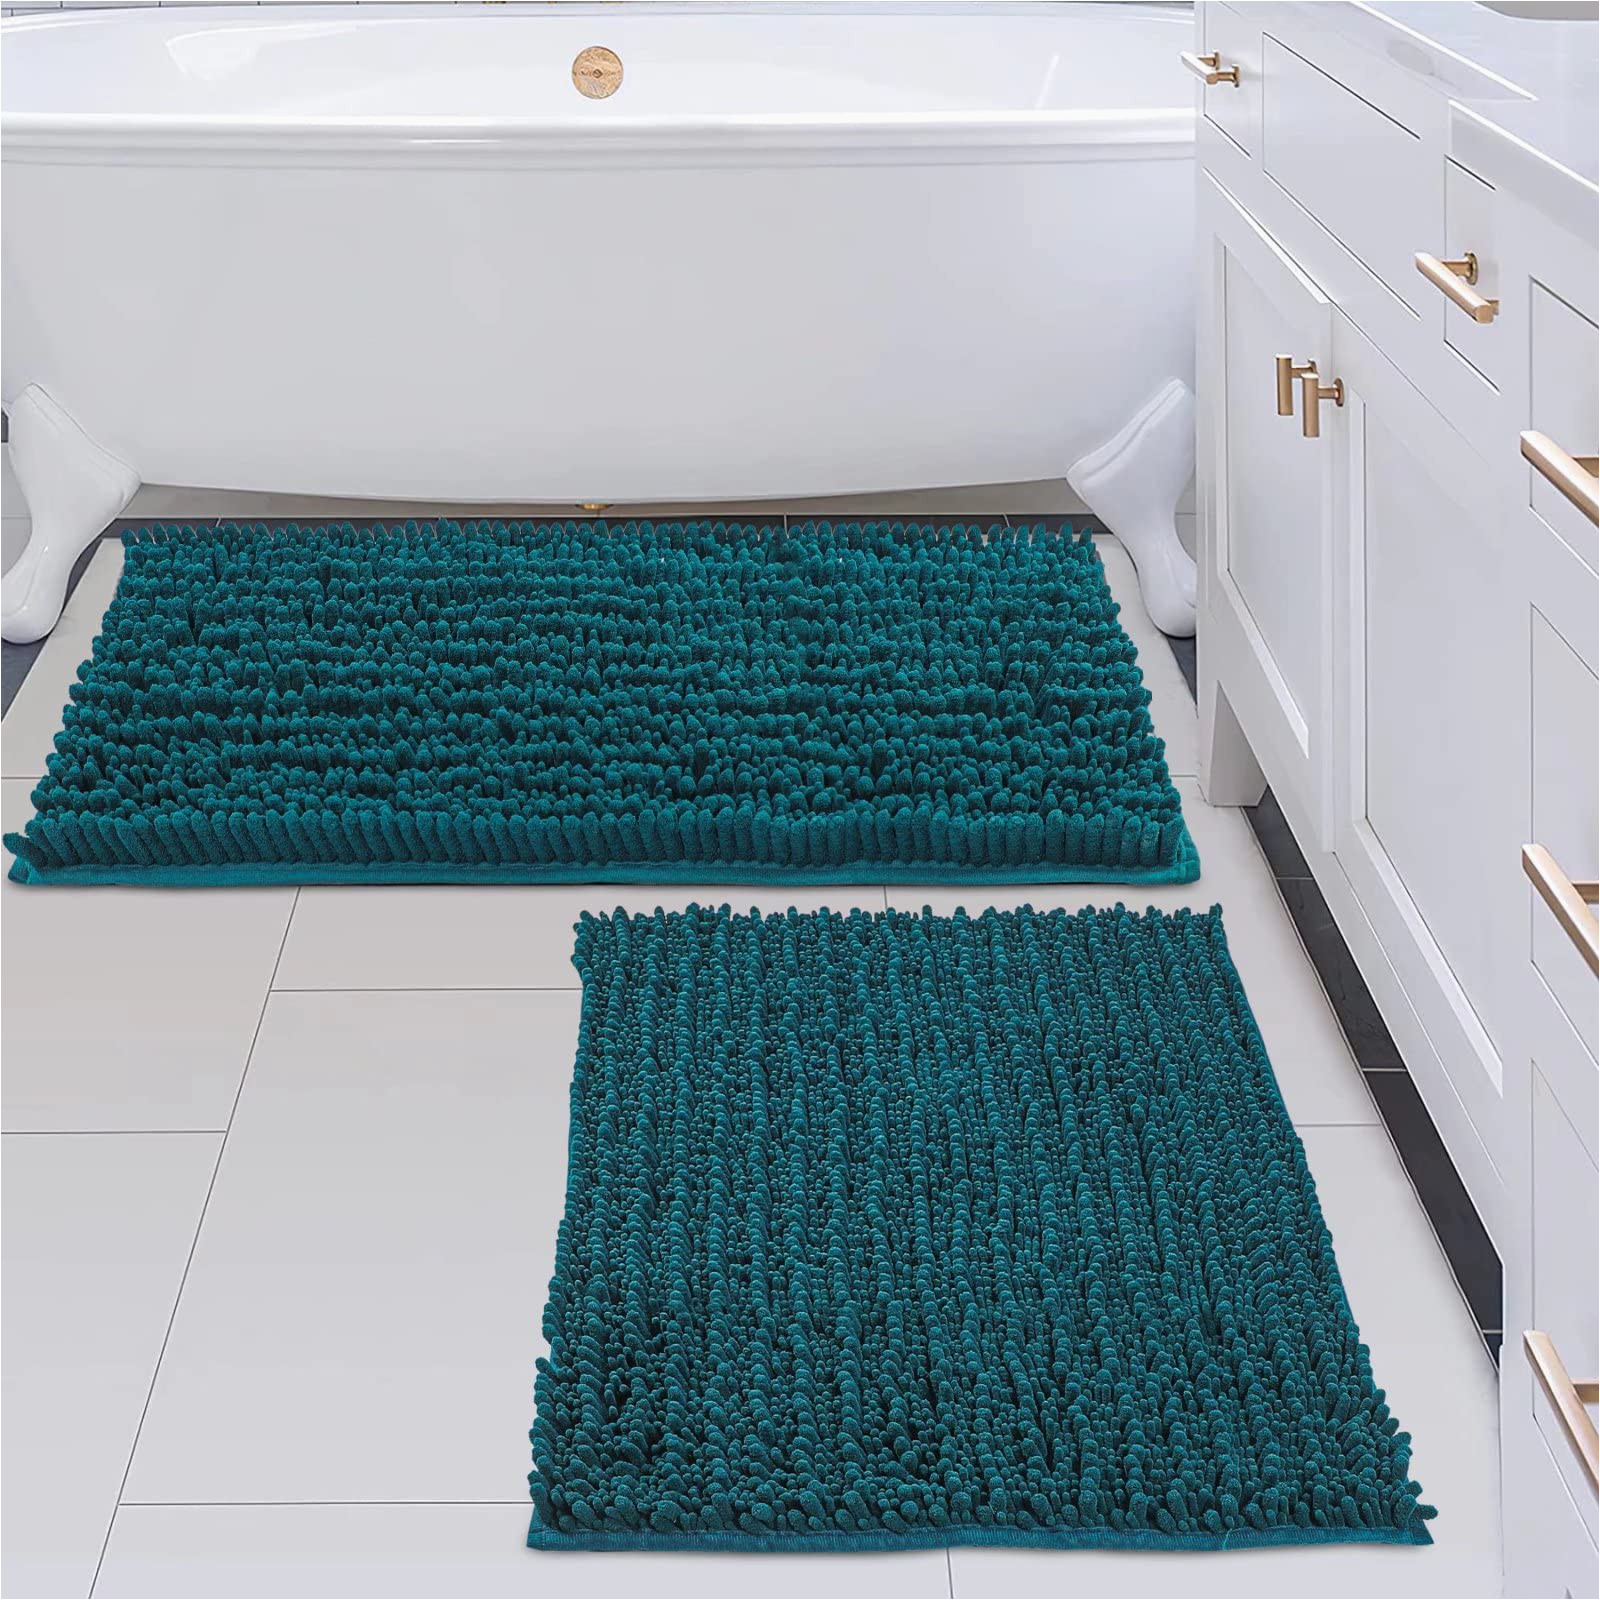 Peacock Blue Bath Rugs Amazon.com: Luxury Teal Chenille Bathroom Rugs, Quick Dry Bath …